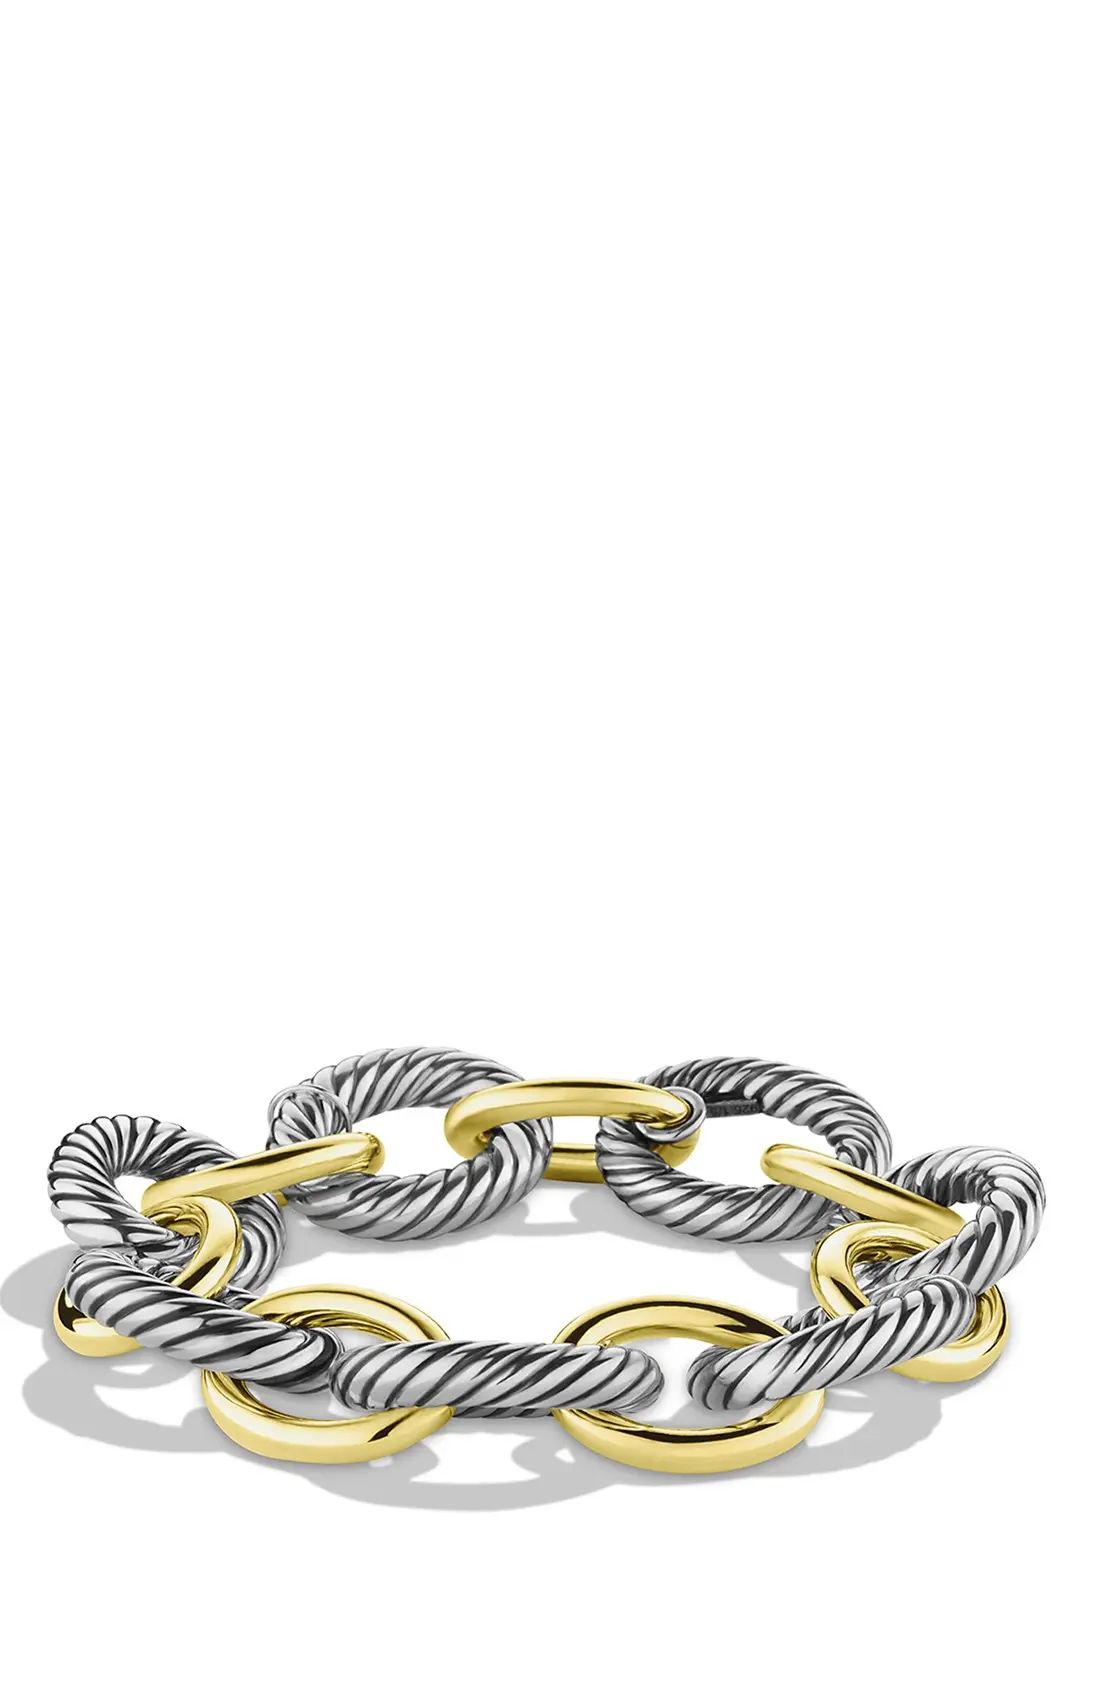 David Yurman 'Oval' Extra-Large Link Bracelet with Gold | Nordstrom